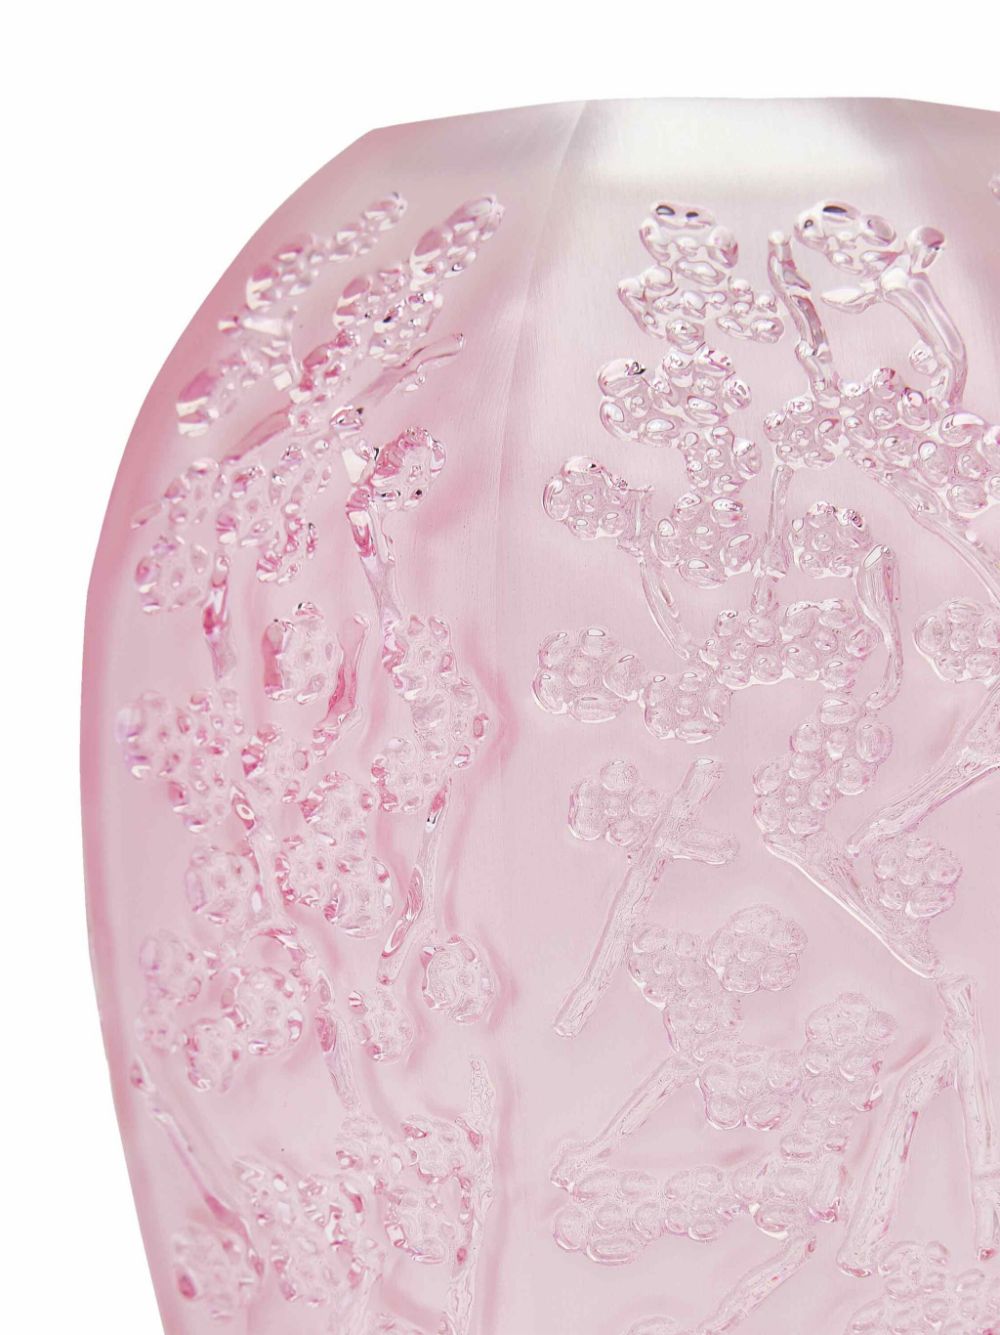 Lalique Sakura kristallen vaas (17,5 cm) - Roze